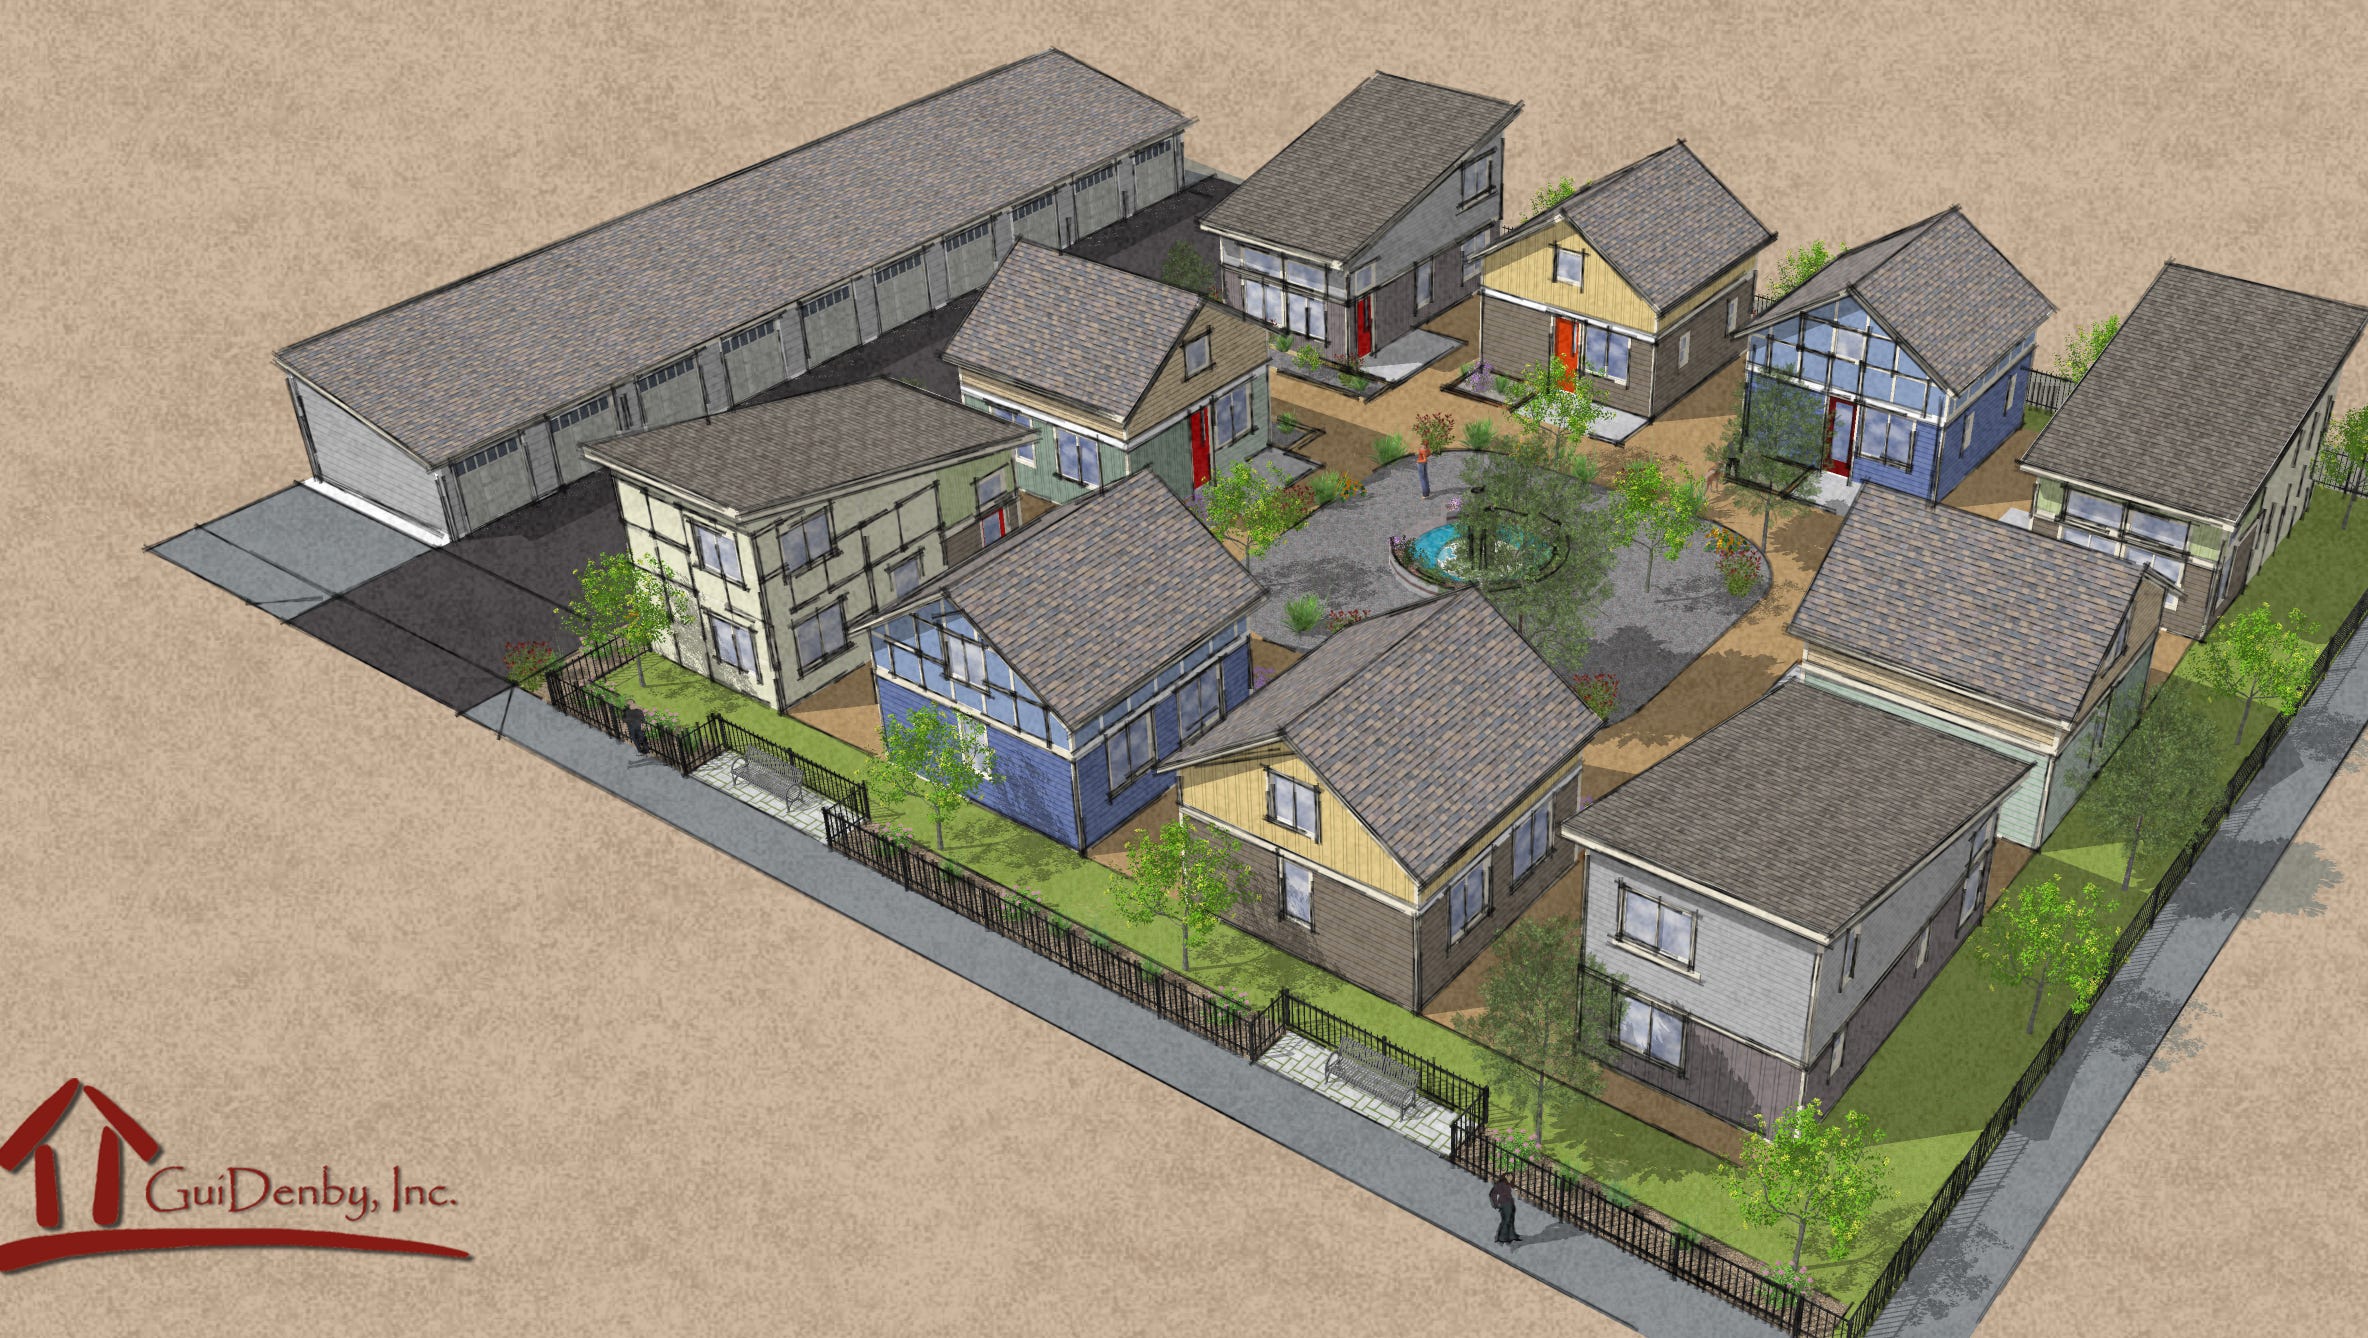 Community plan. Community House. Neighborhoods tiny Houses. Small community. Pocket neighborhood.